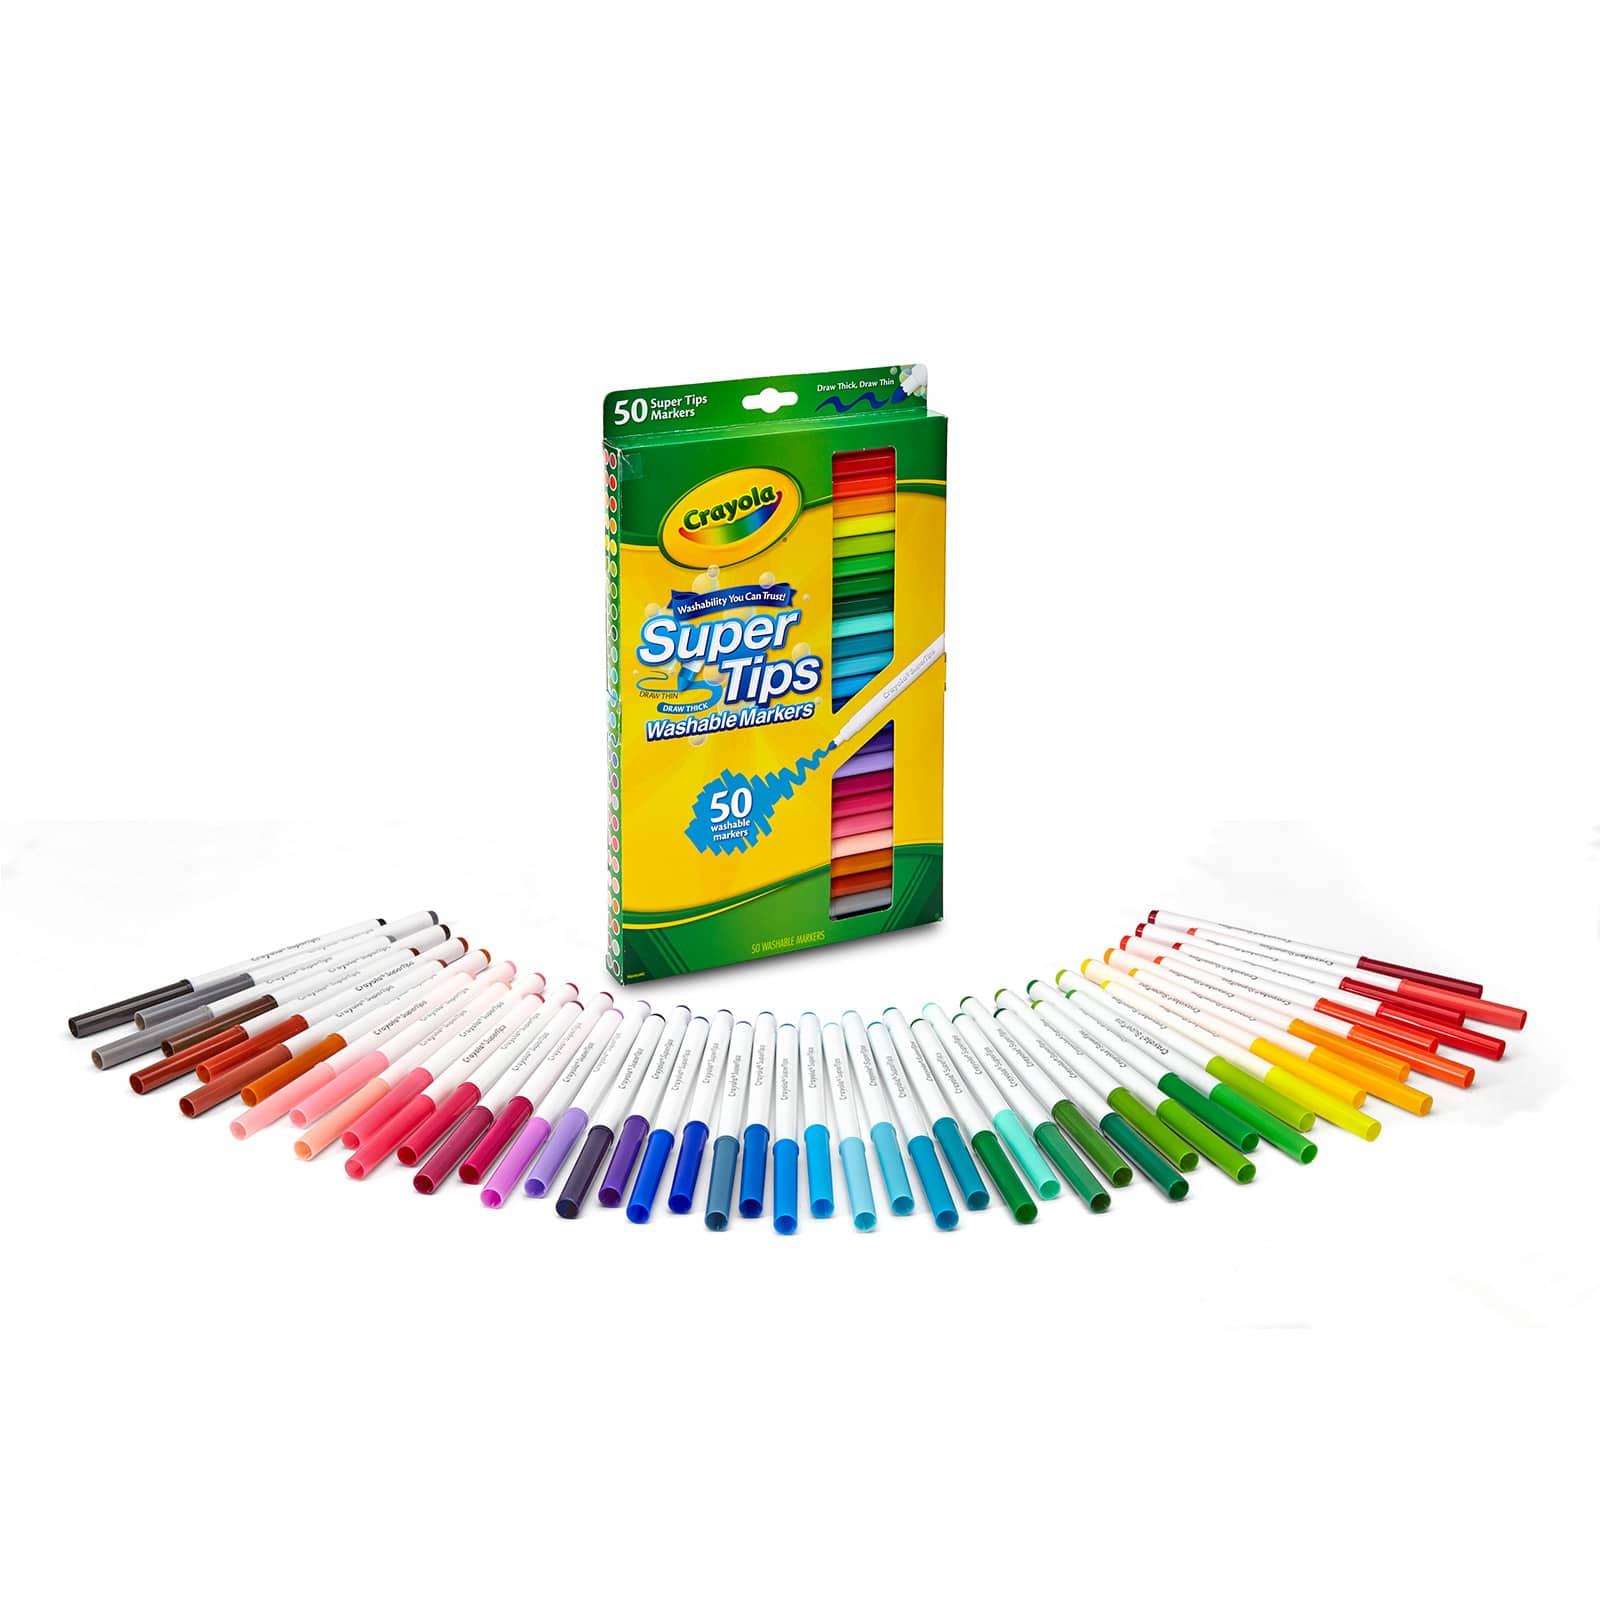 Crayola 50 Super Tips Washable Markers